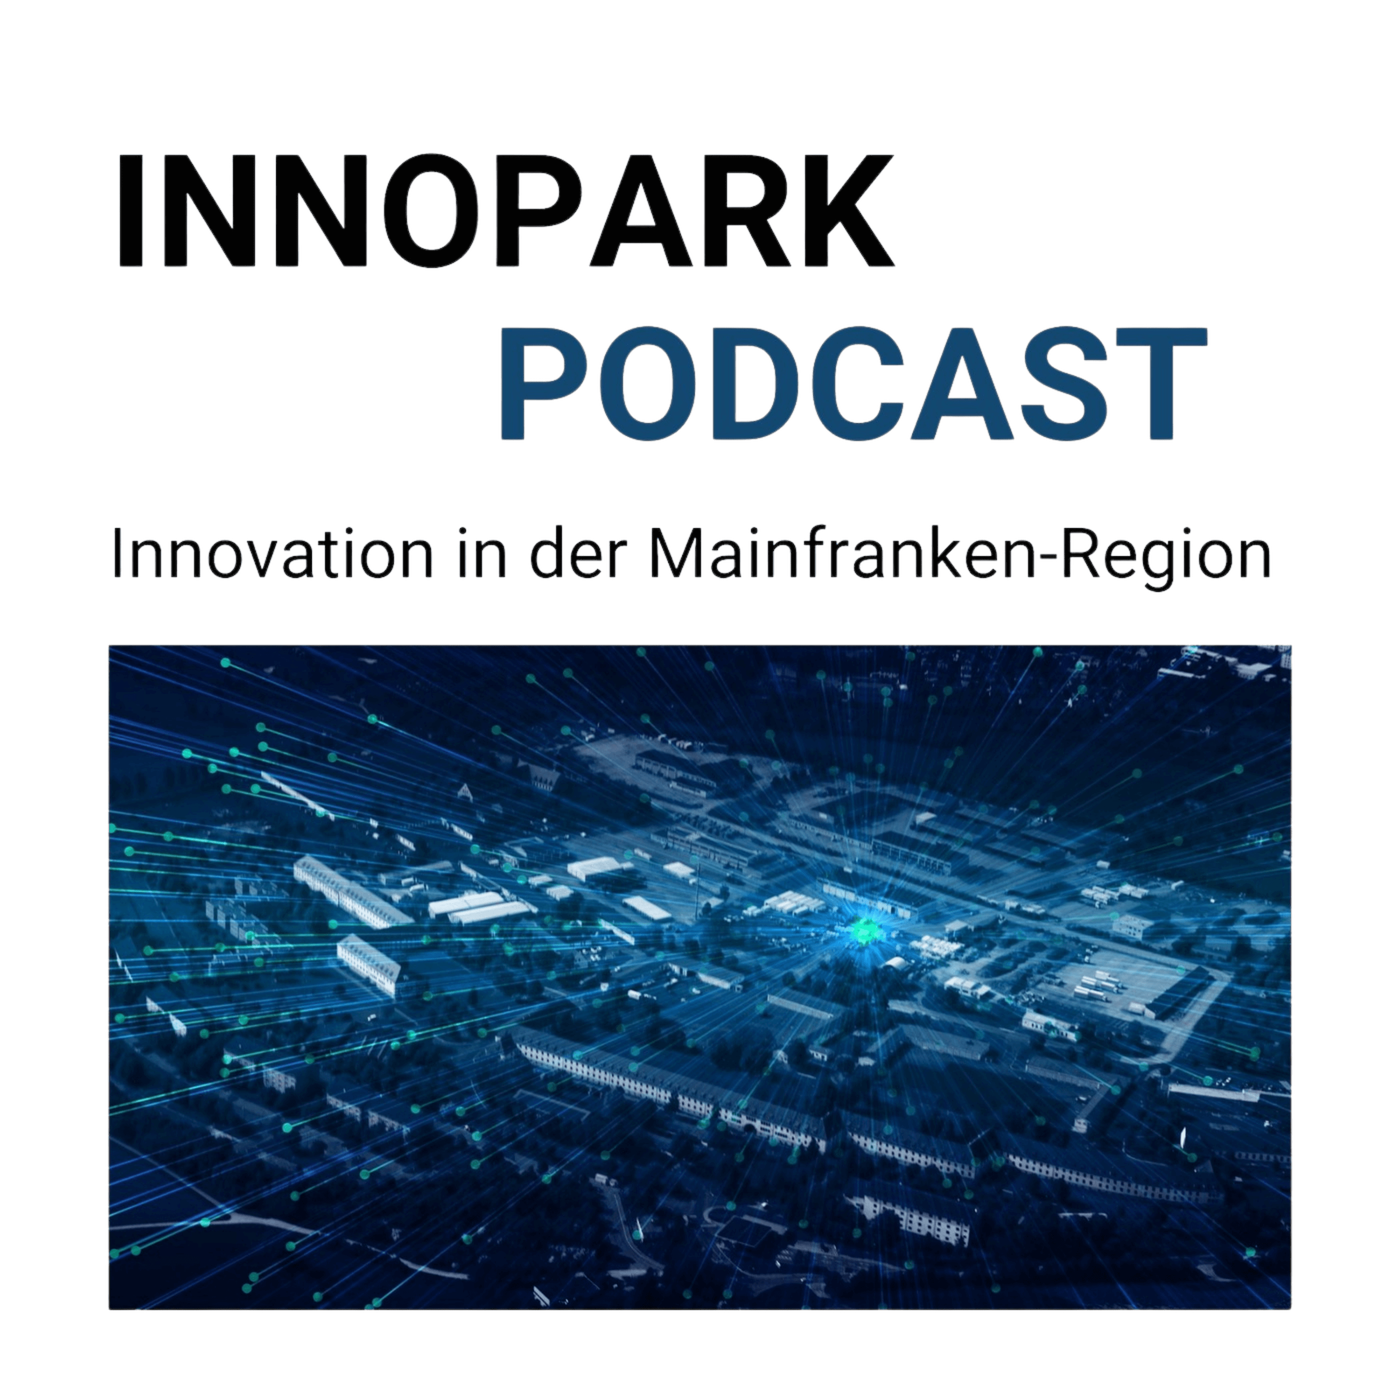 Innopark Podcast